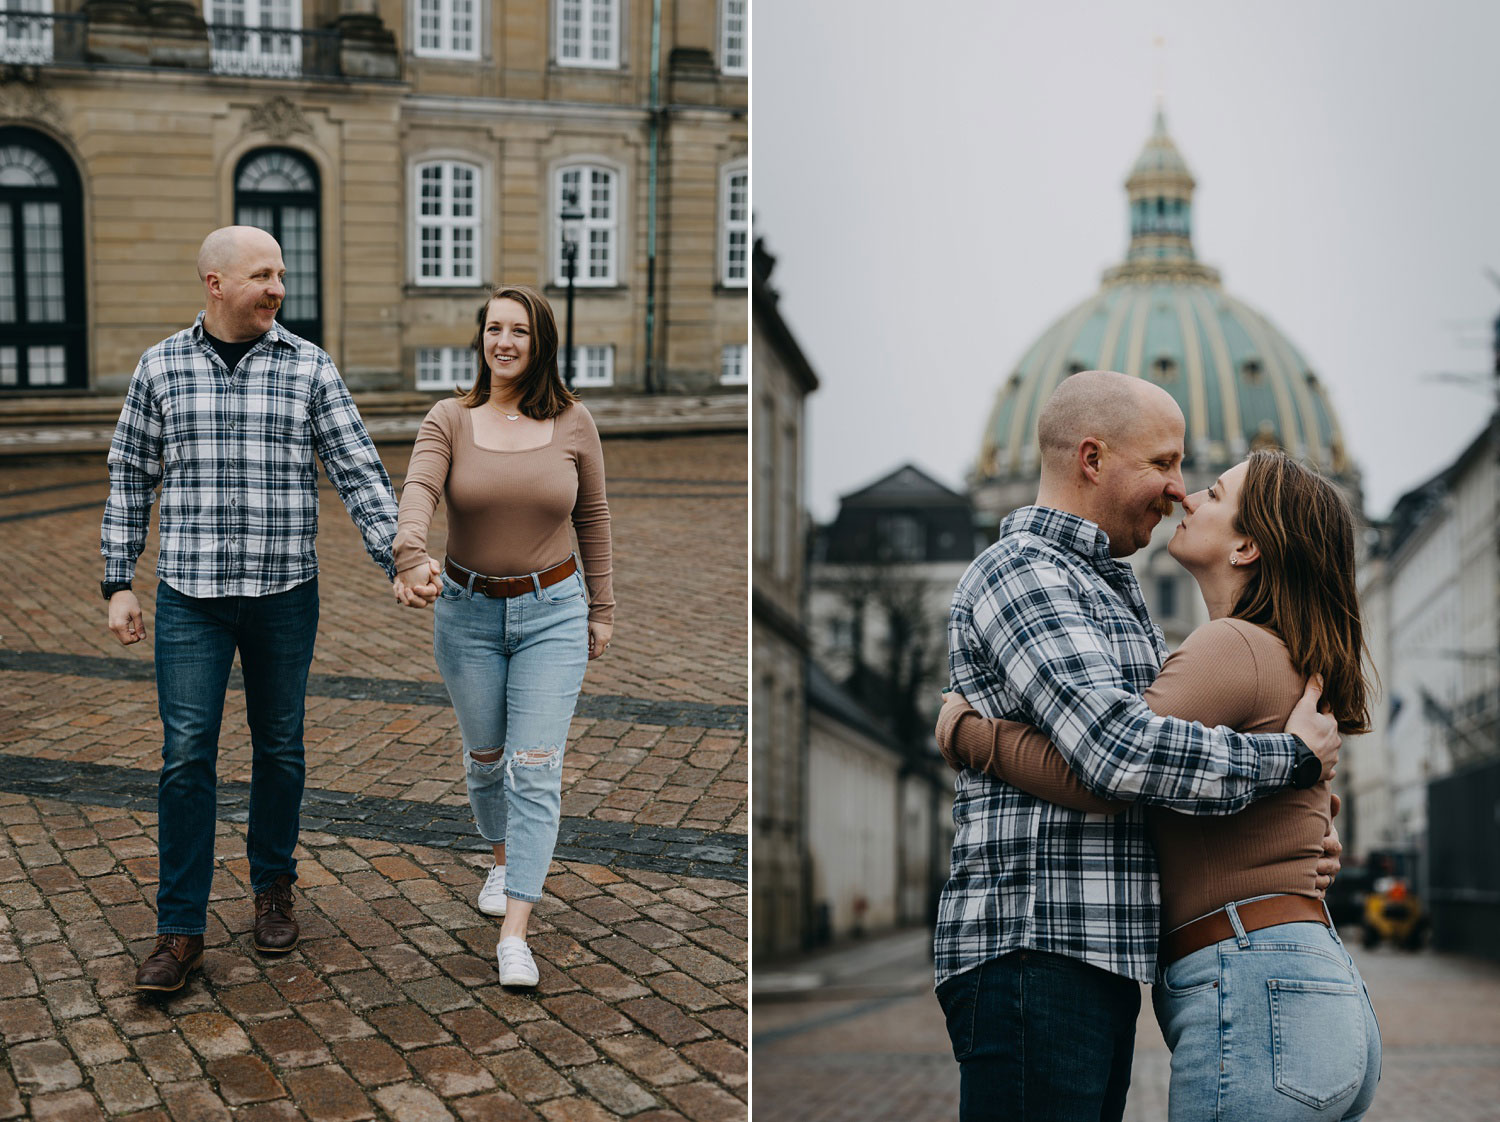 Honeymoon photos at Amalienborg Palace in Copenhagen